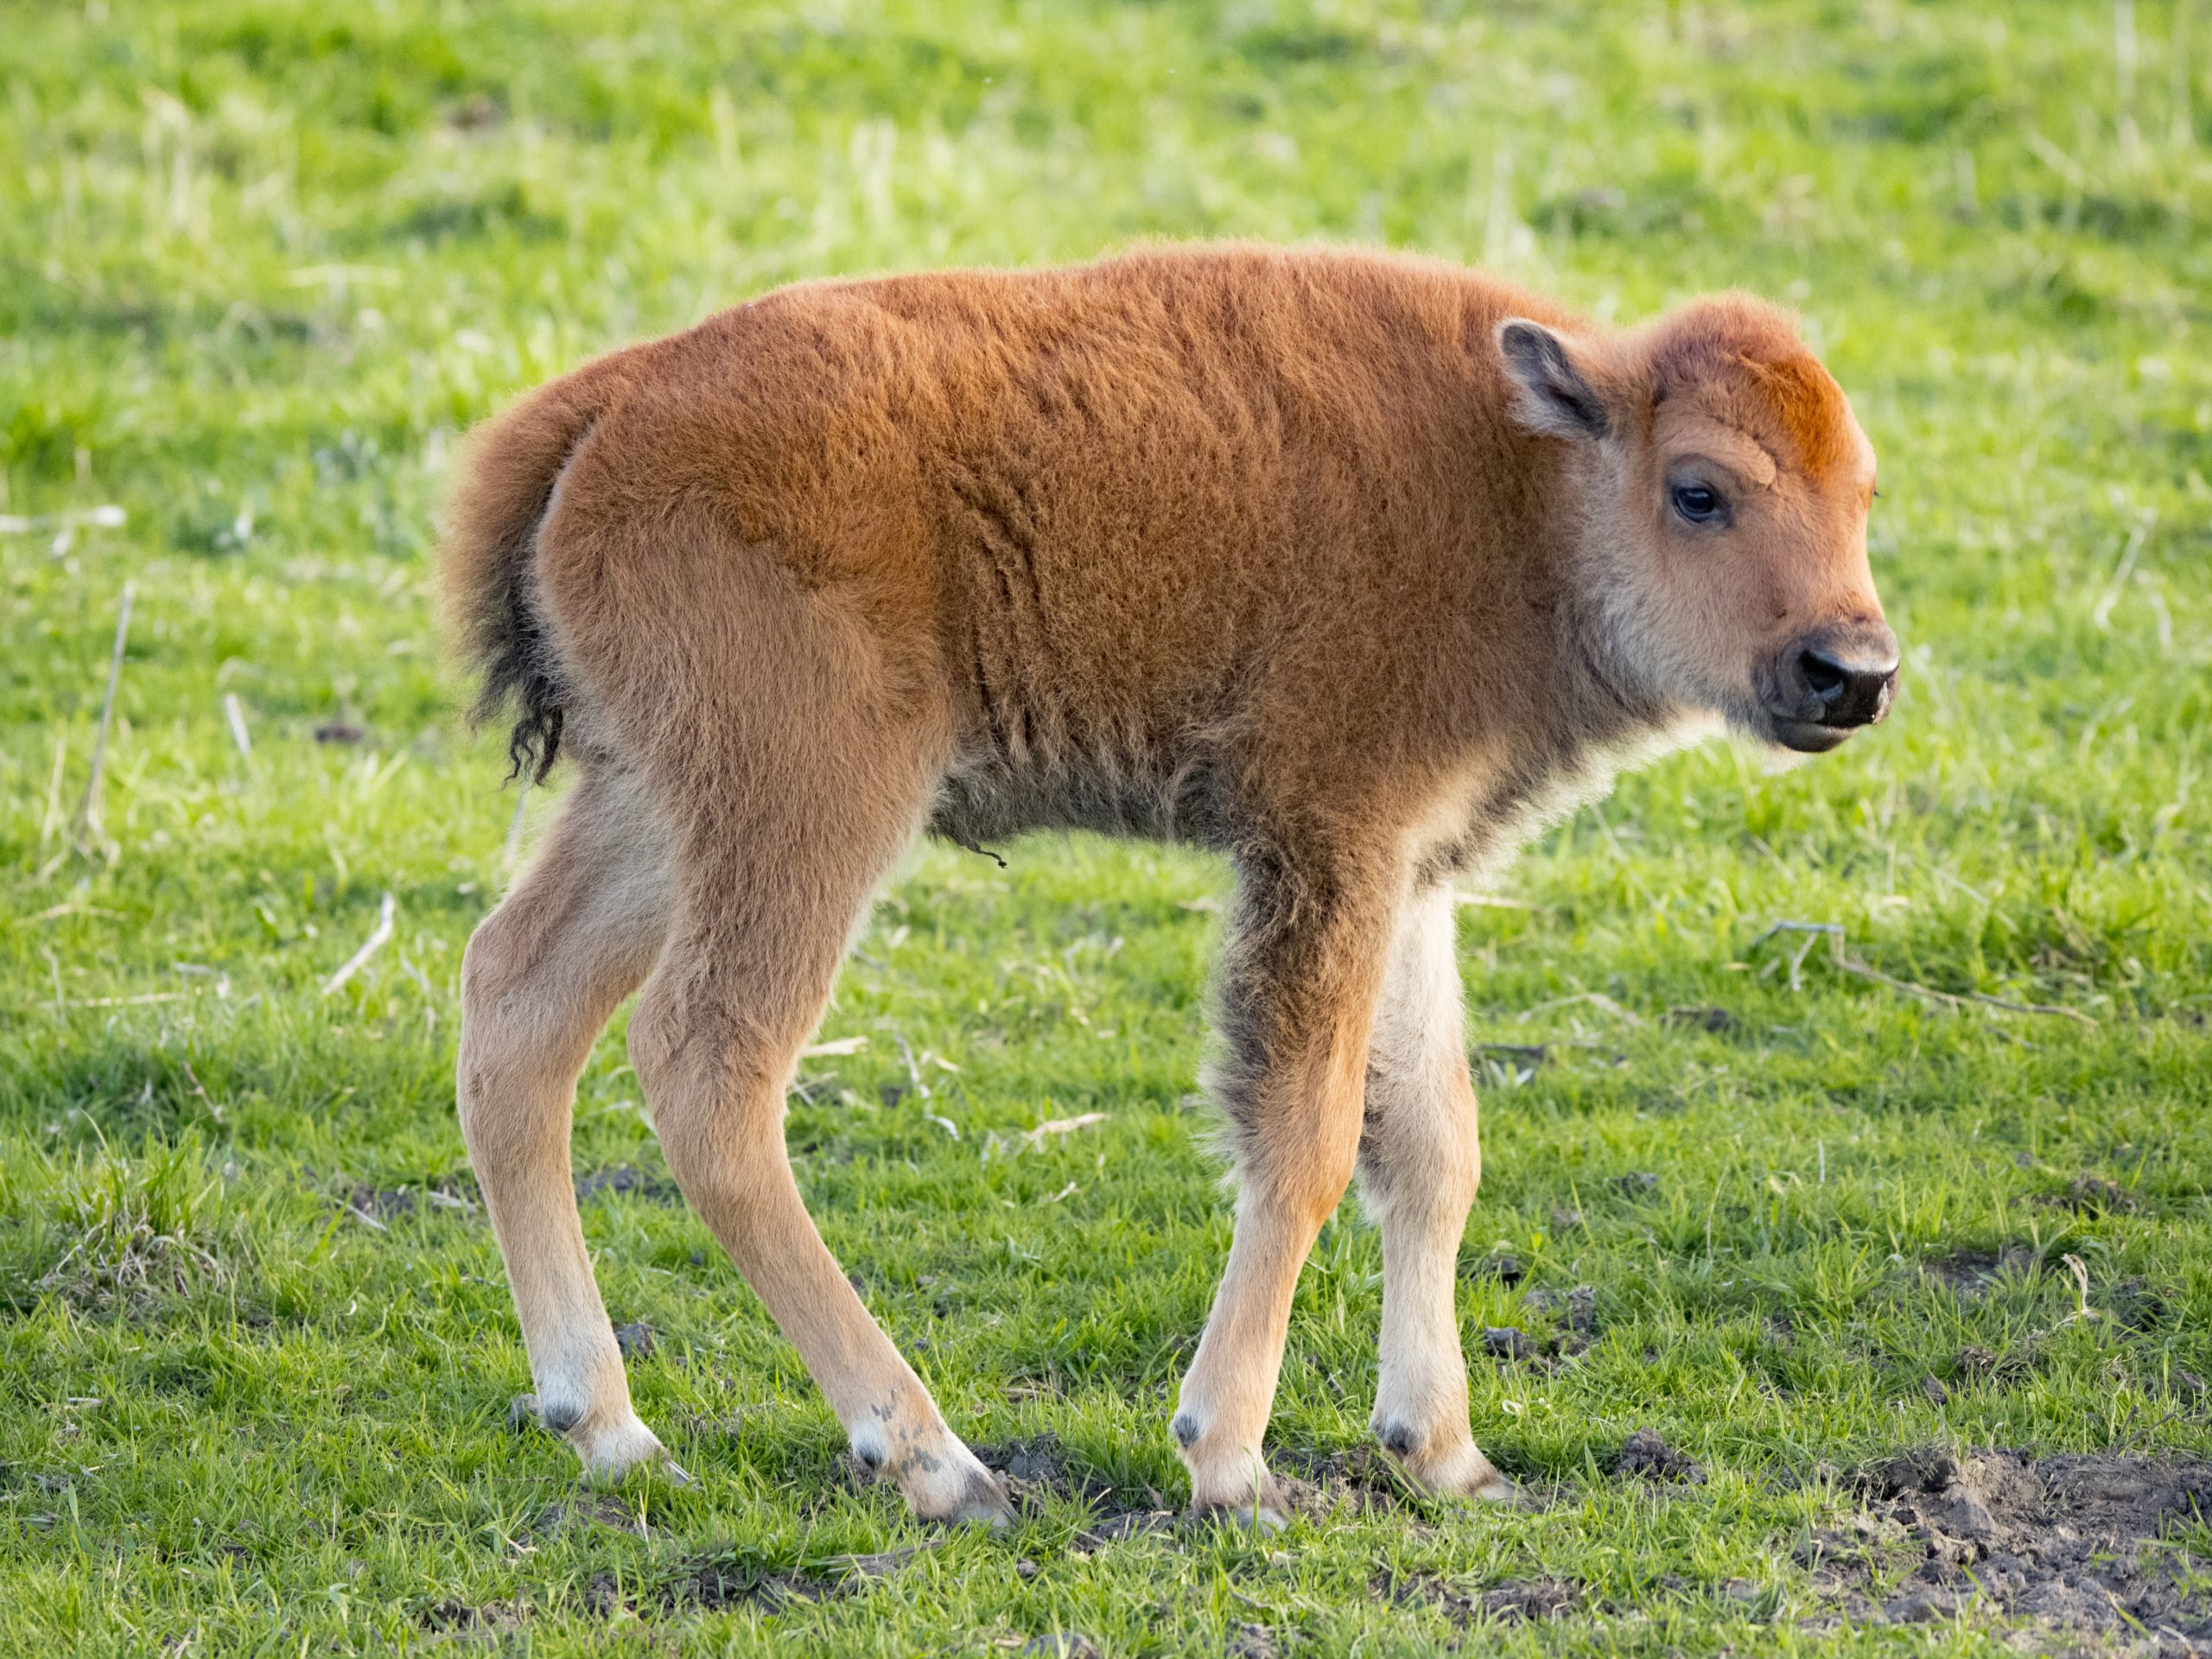 Bison calf